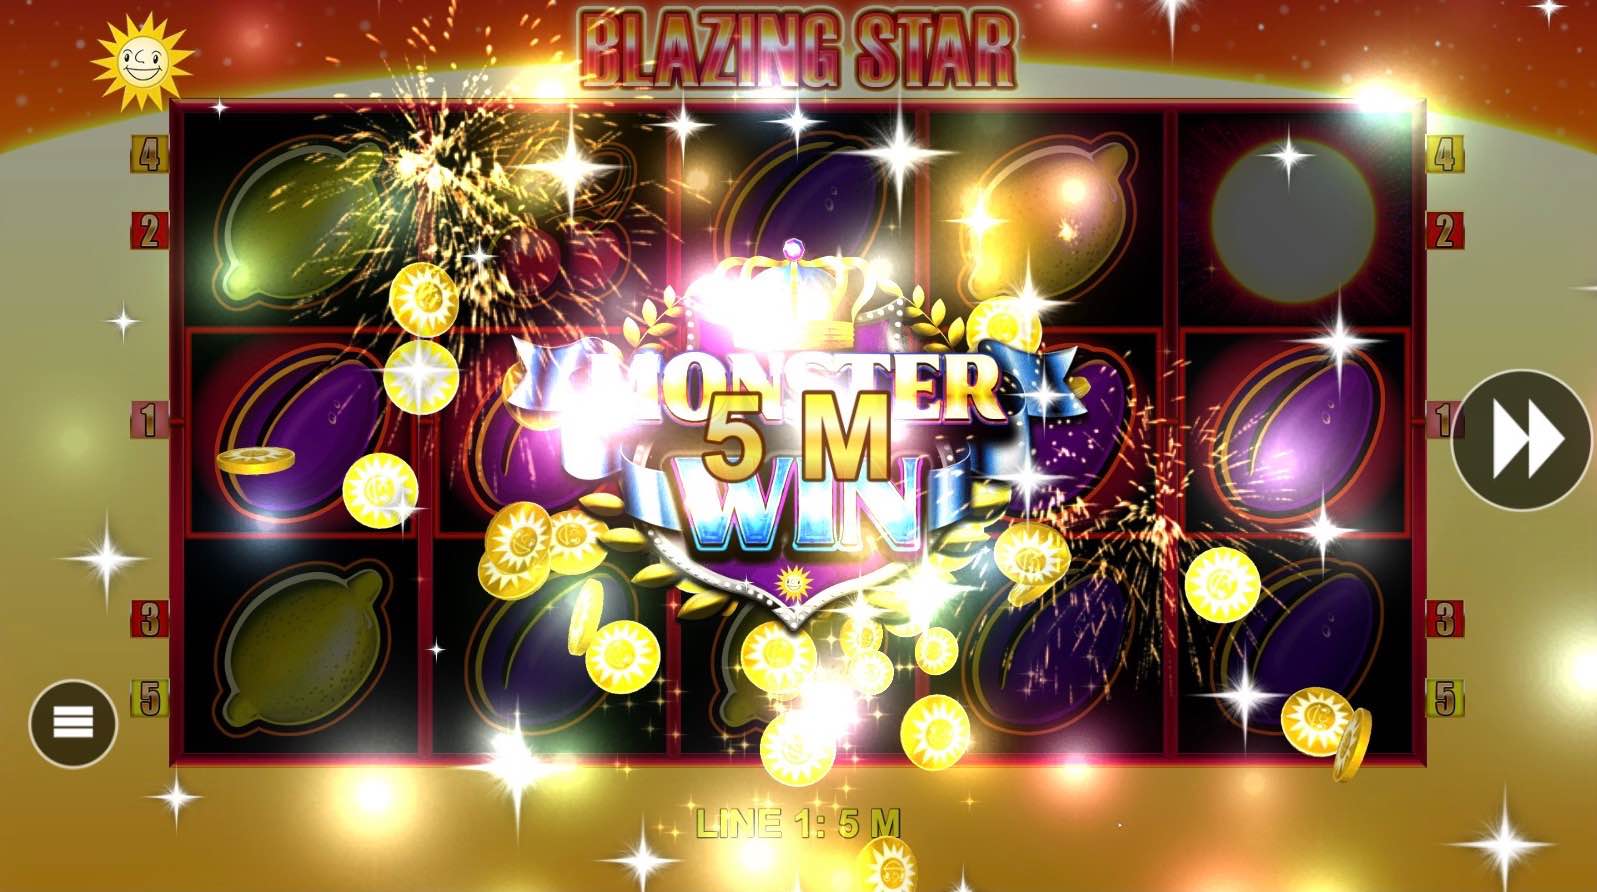 Blazing Star Slot by Rival - 5 million wins